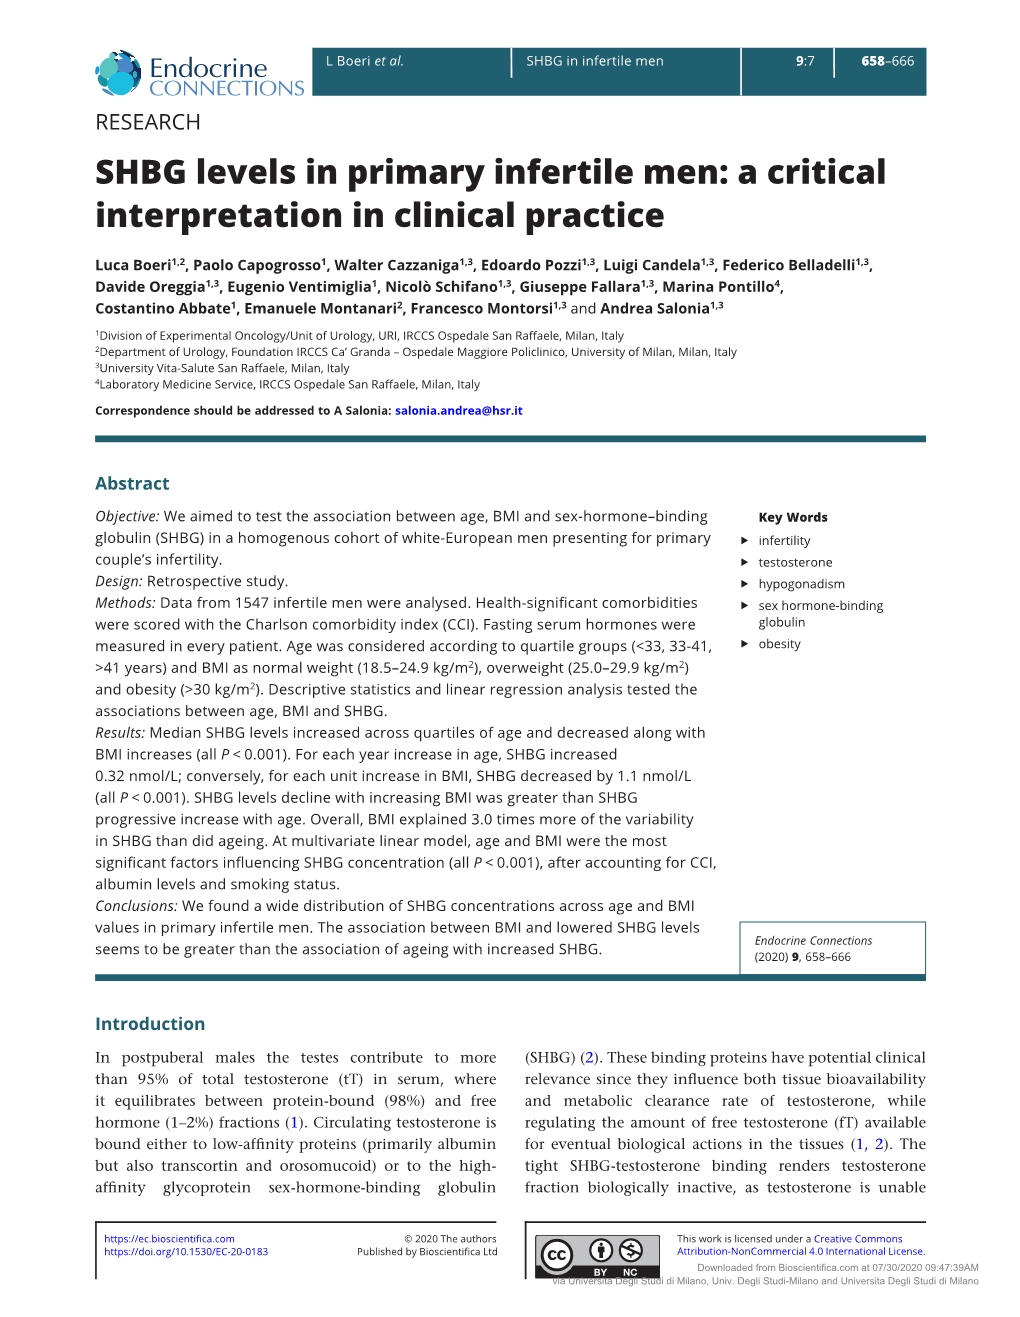 SHBG Levels in Primary Infertile Men: a Critical Interpretation in Clinical Practice